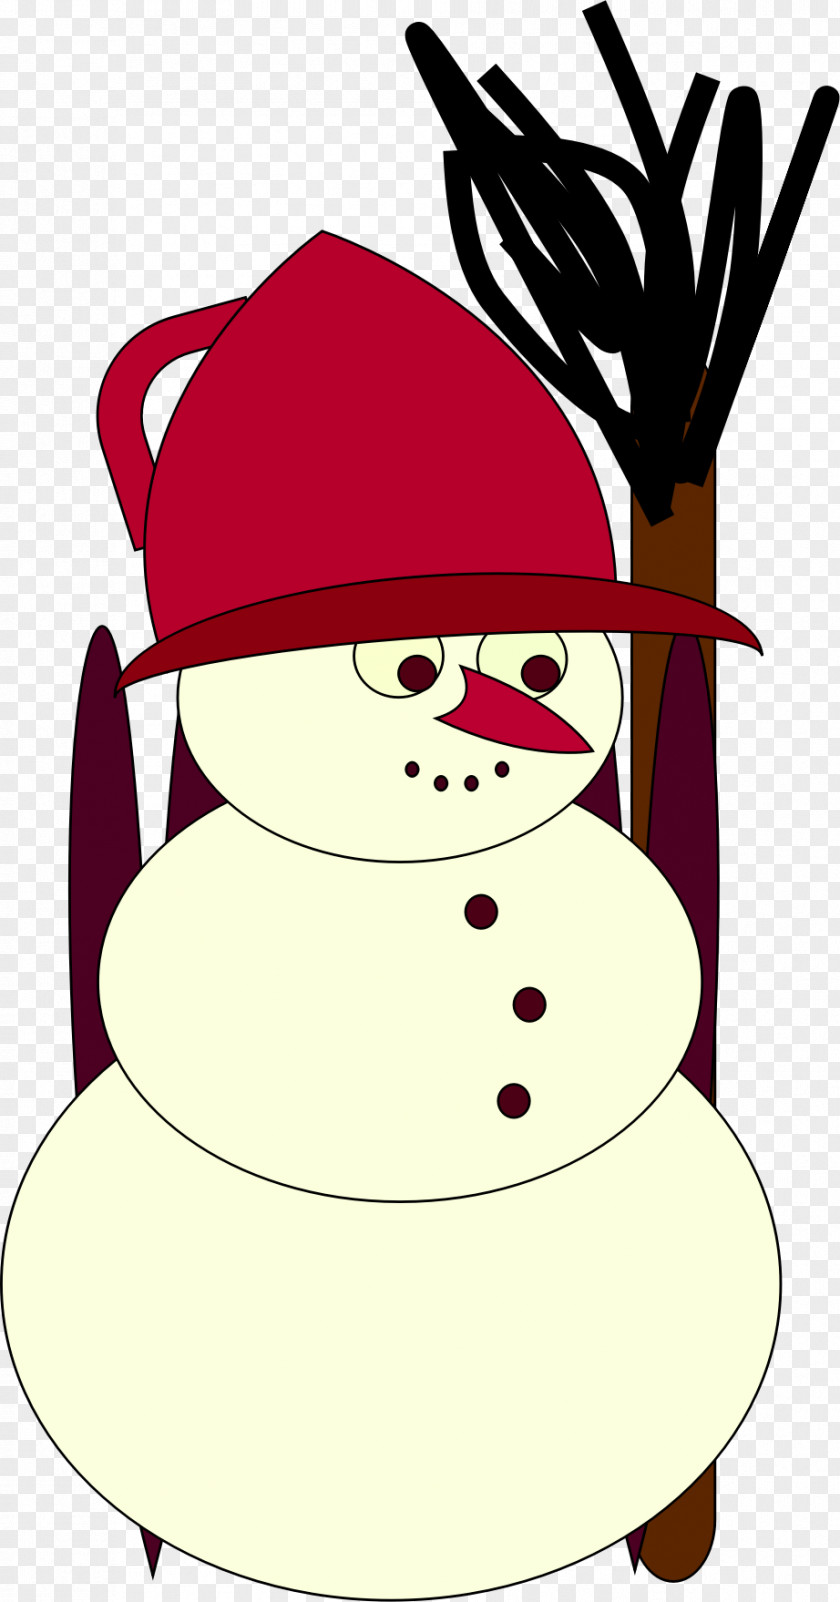 Snowman Clip Art Christmas Illustration Image PNG